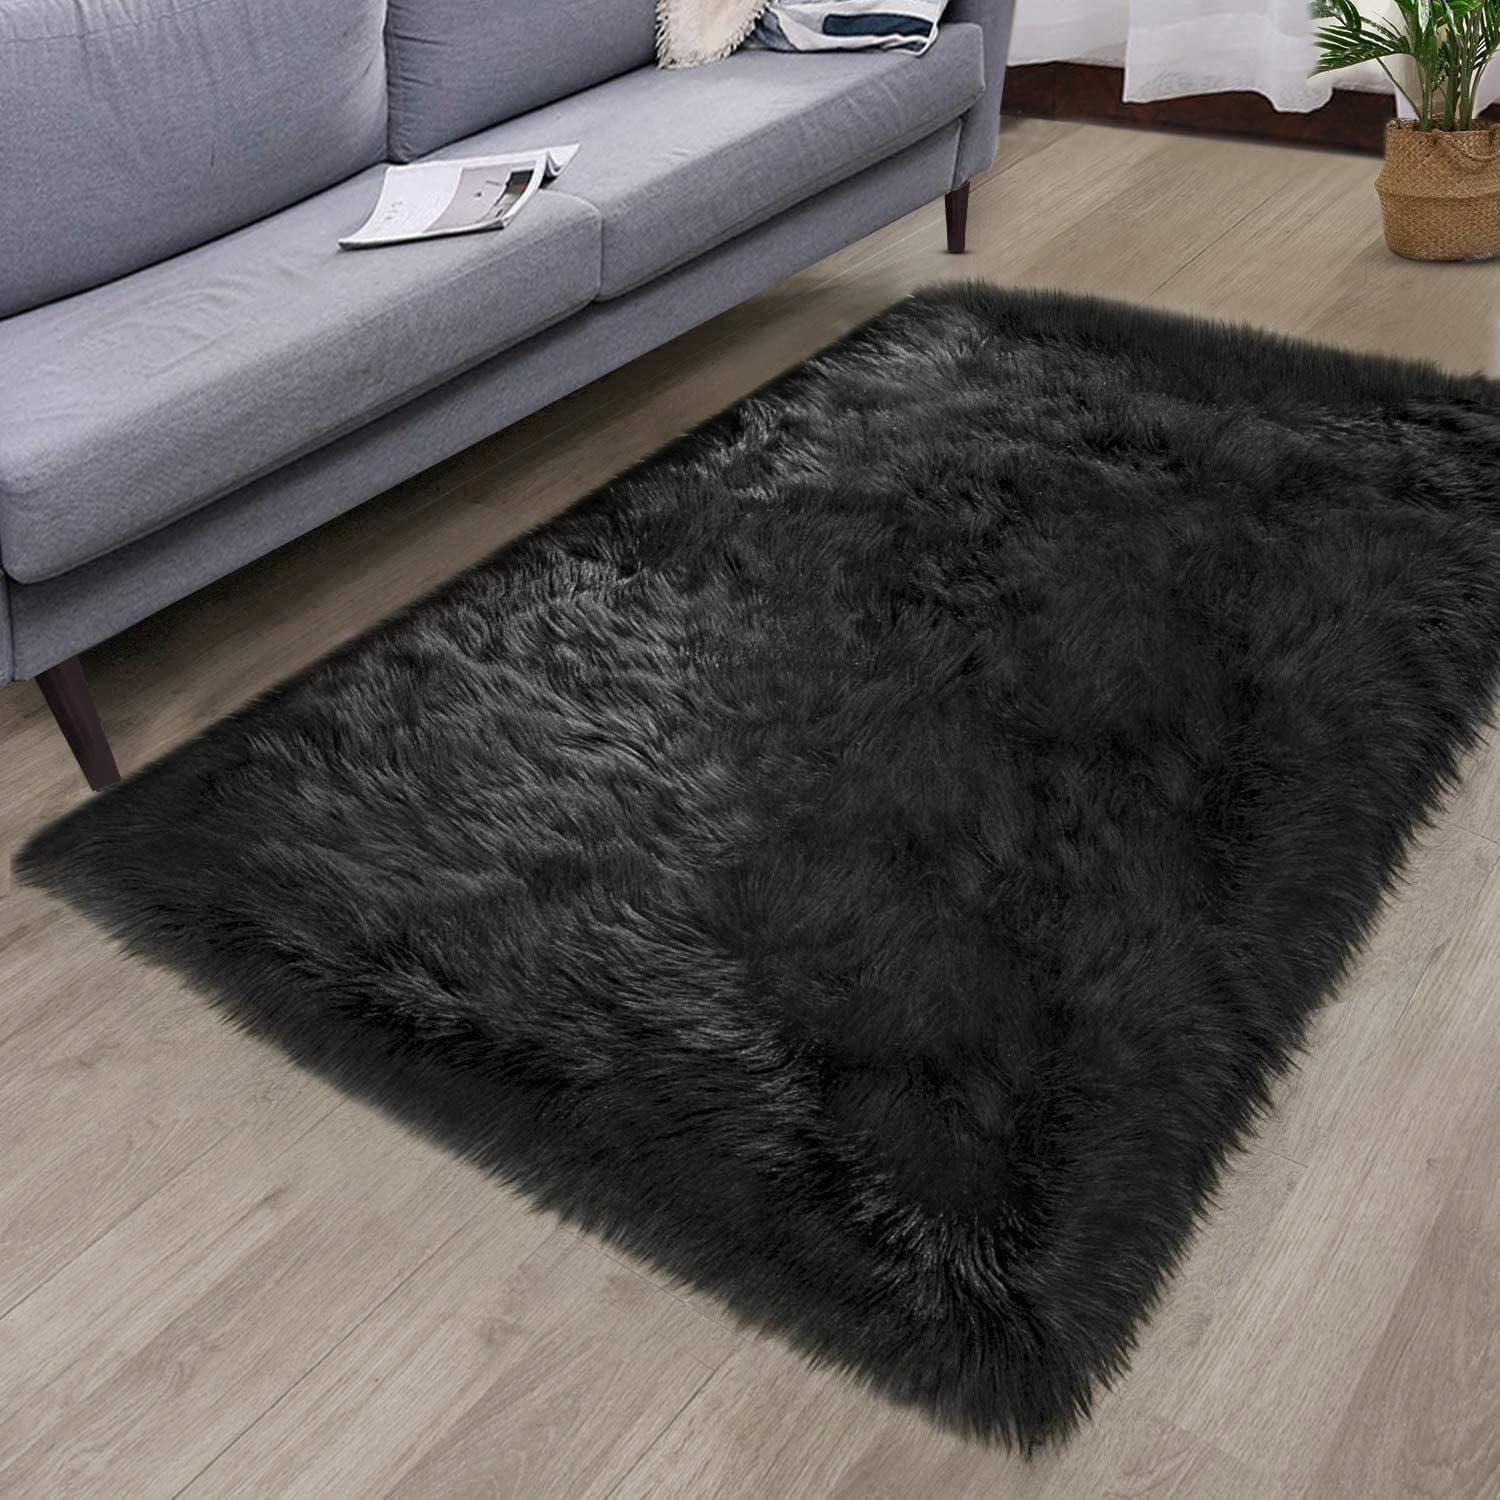 Buythrow Faux Sheepskin Fur Area Rug Black,2.3x5 Feet Rectangle, Fluffy